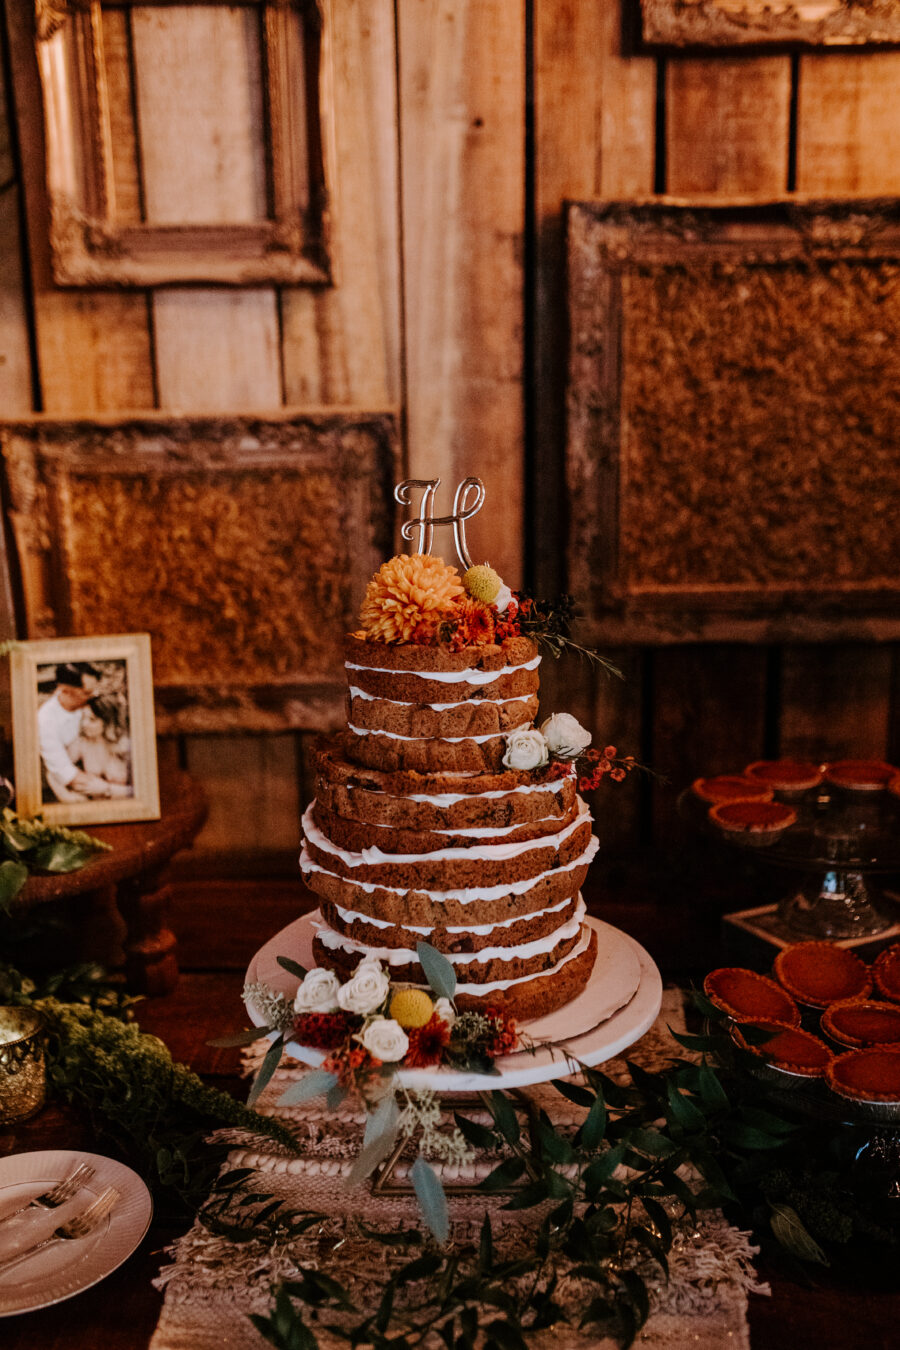 Cookie cake wedding cake design